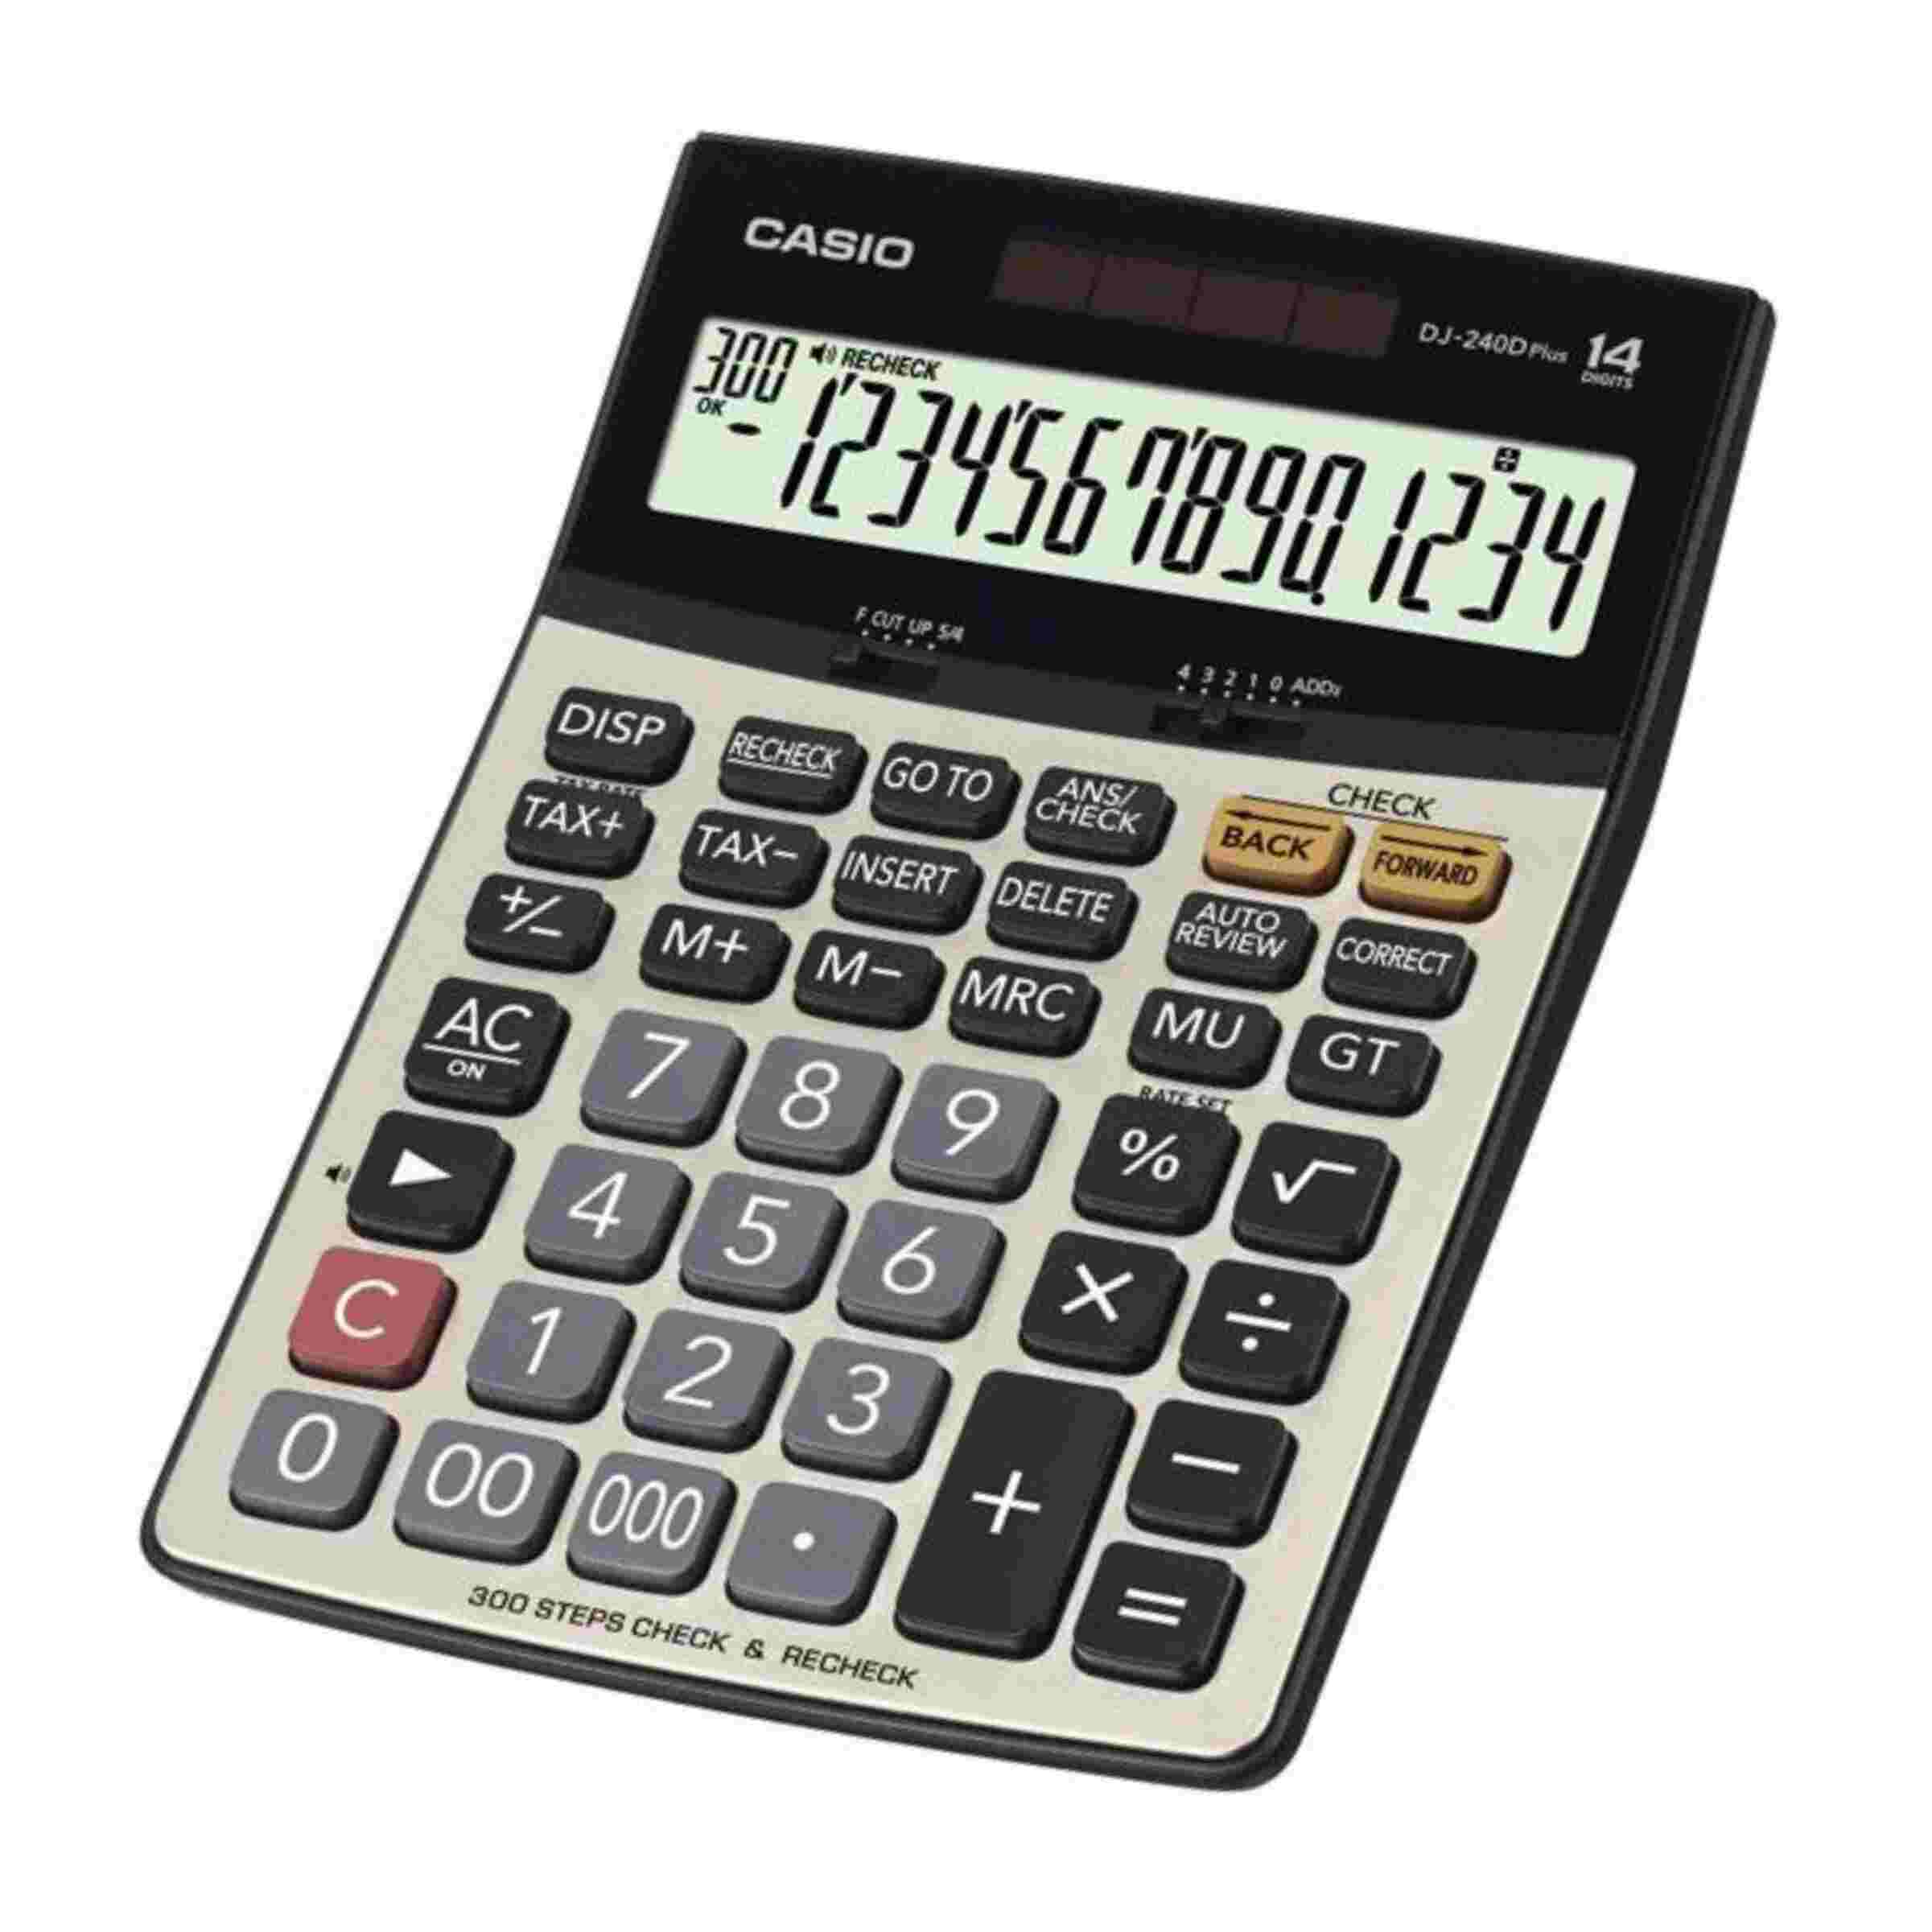 Casio Original Check & Recheck Calculator Dj-240D Plus